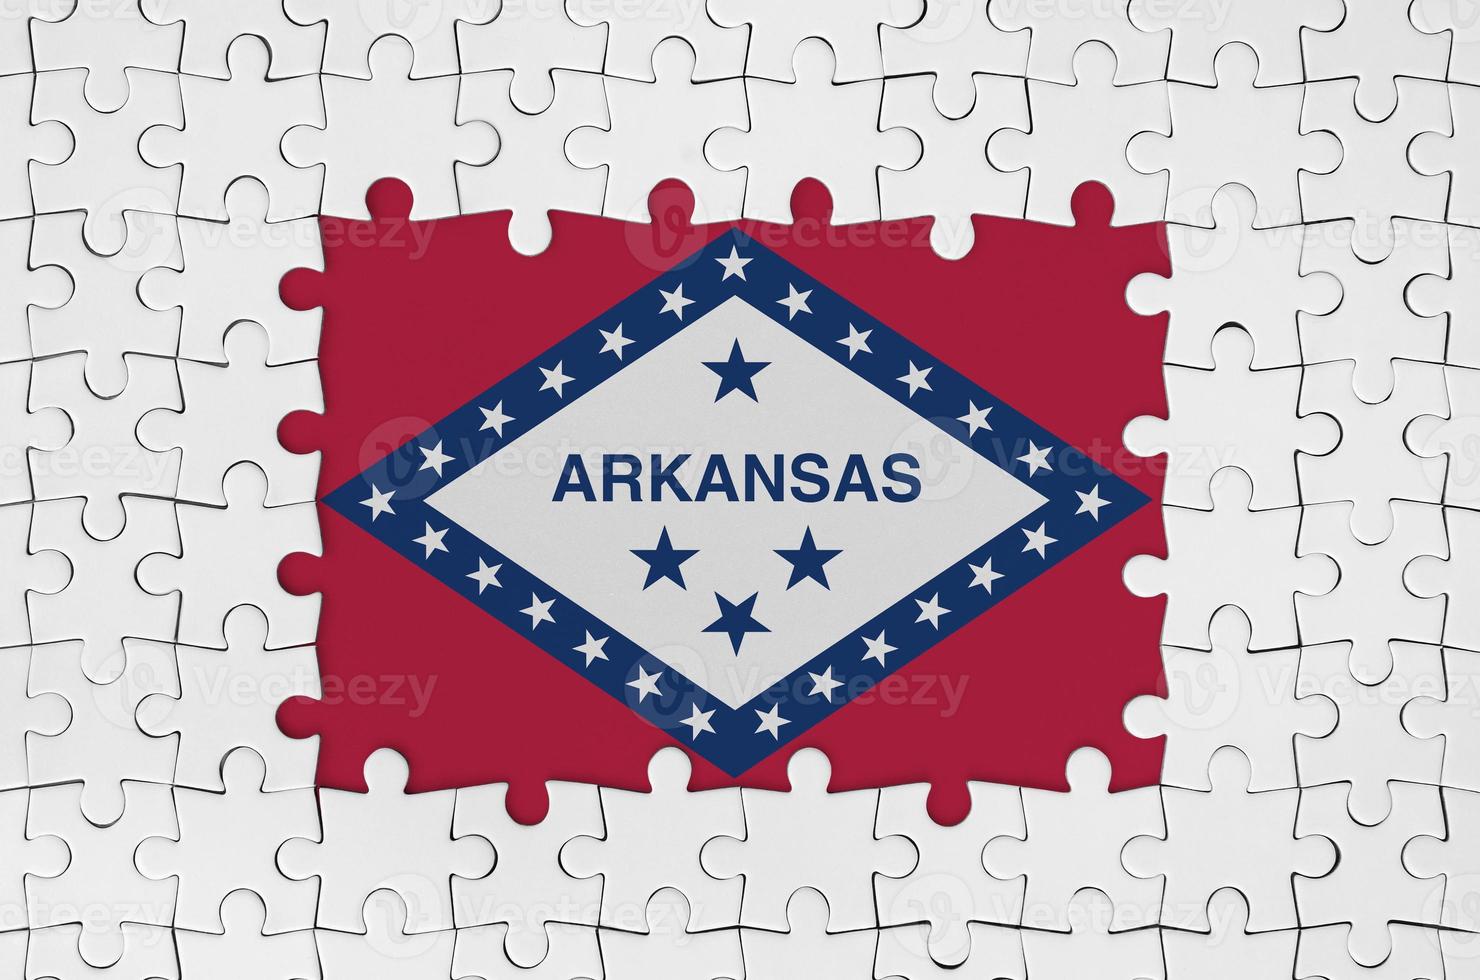 Arkansas oss stat flagga i ram av vit pussel bitar med saknas central del foto